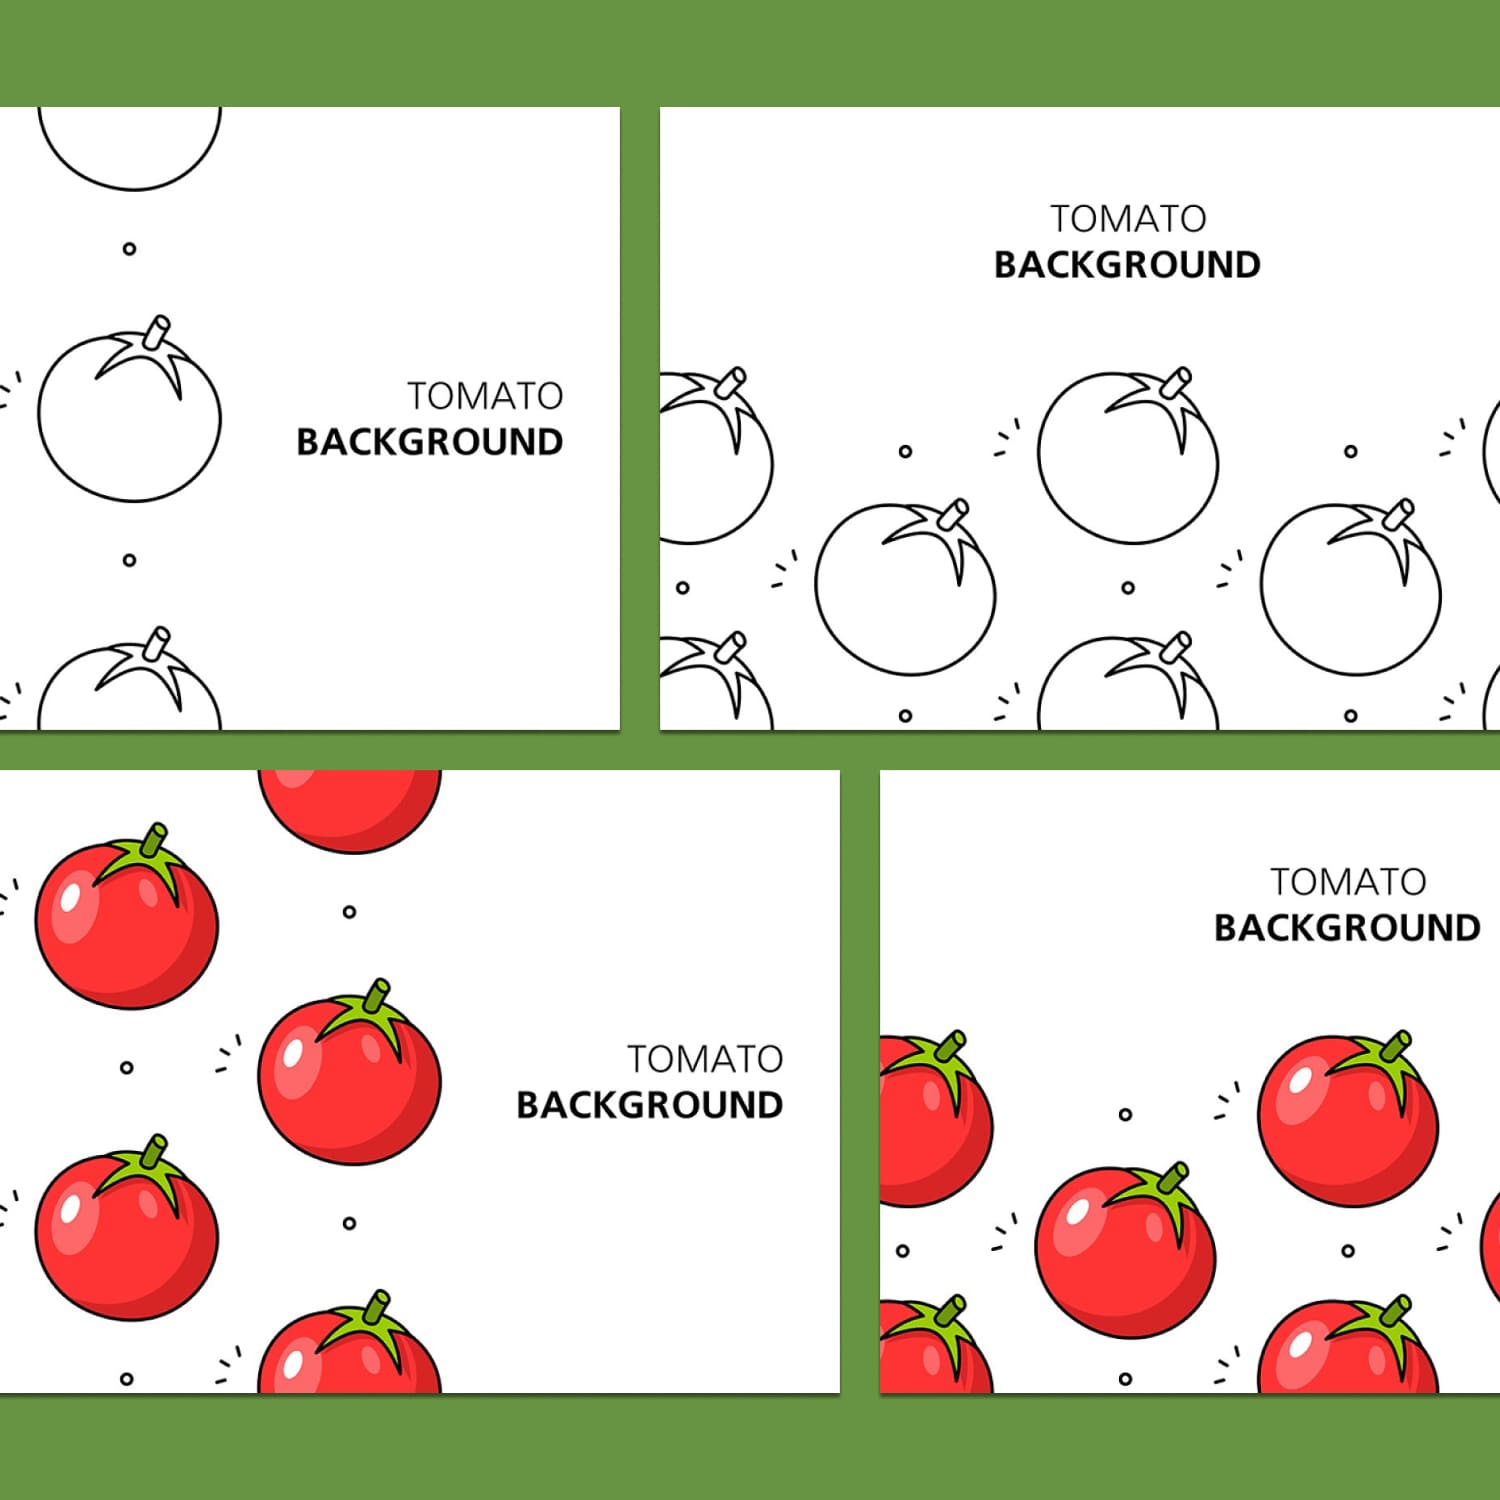 Tomato background created by volyk.nataliia.